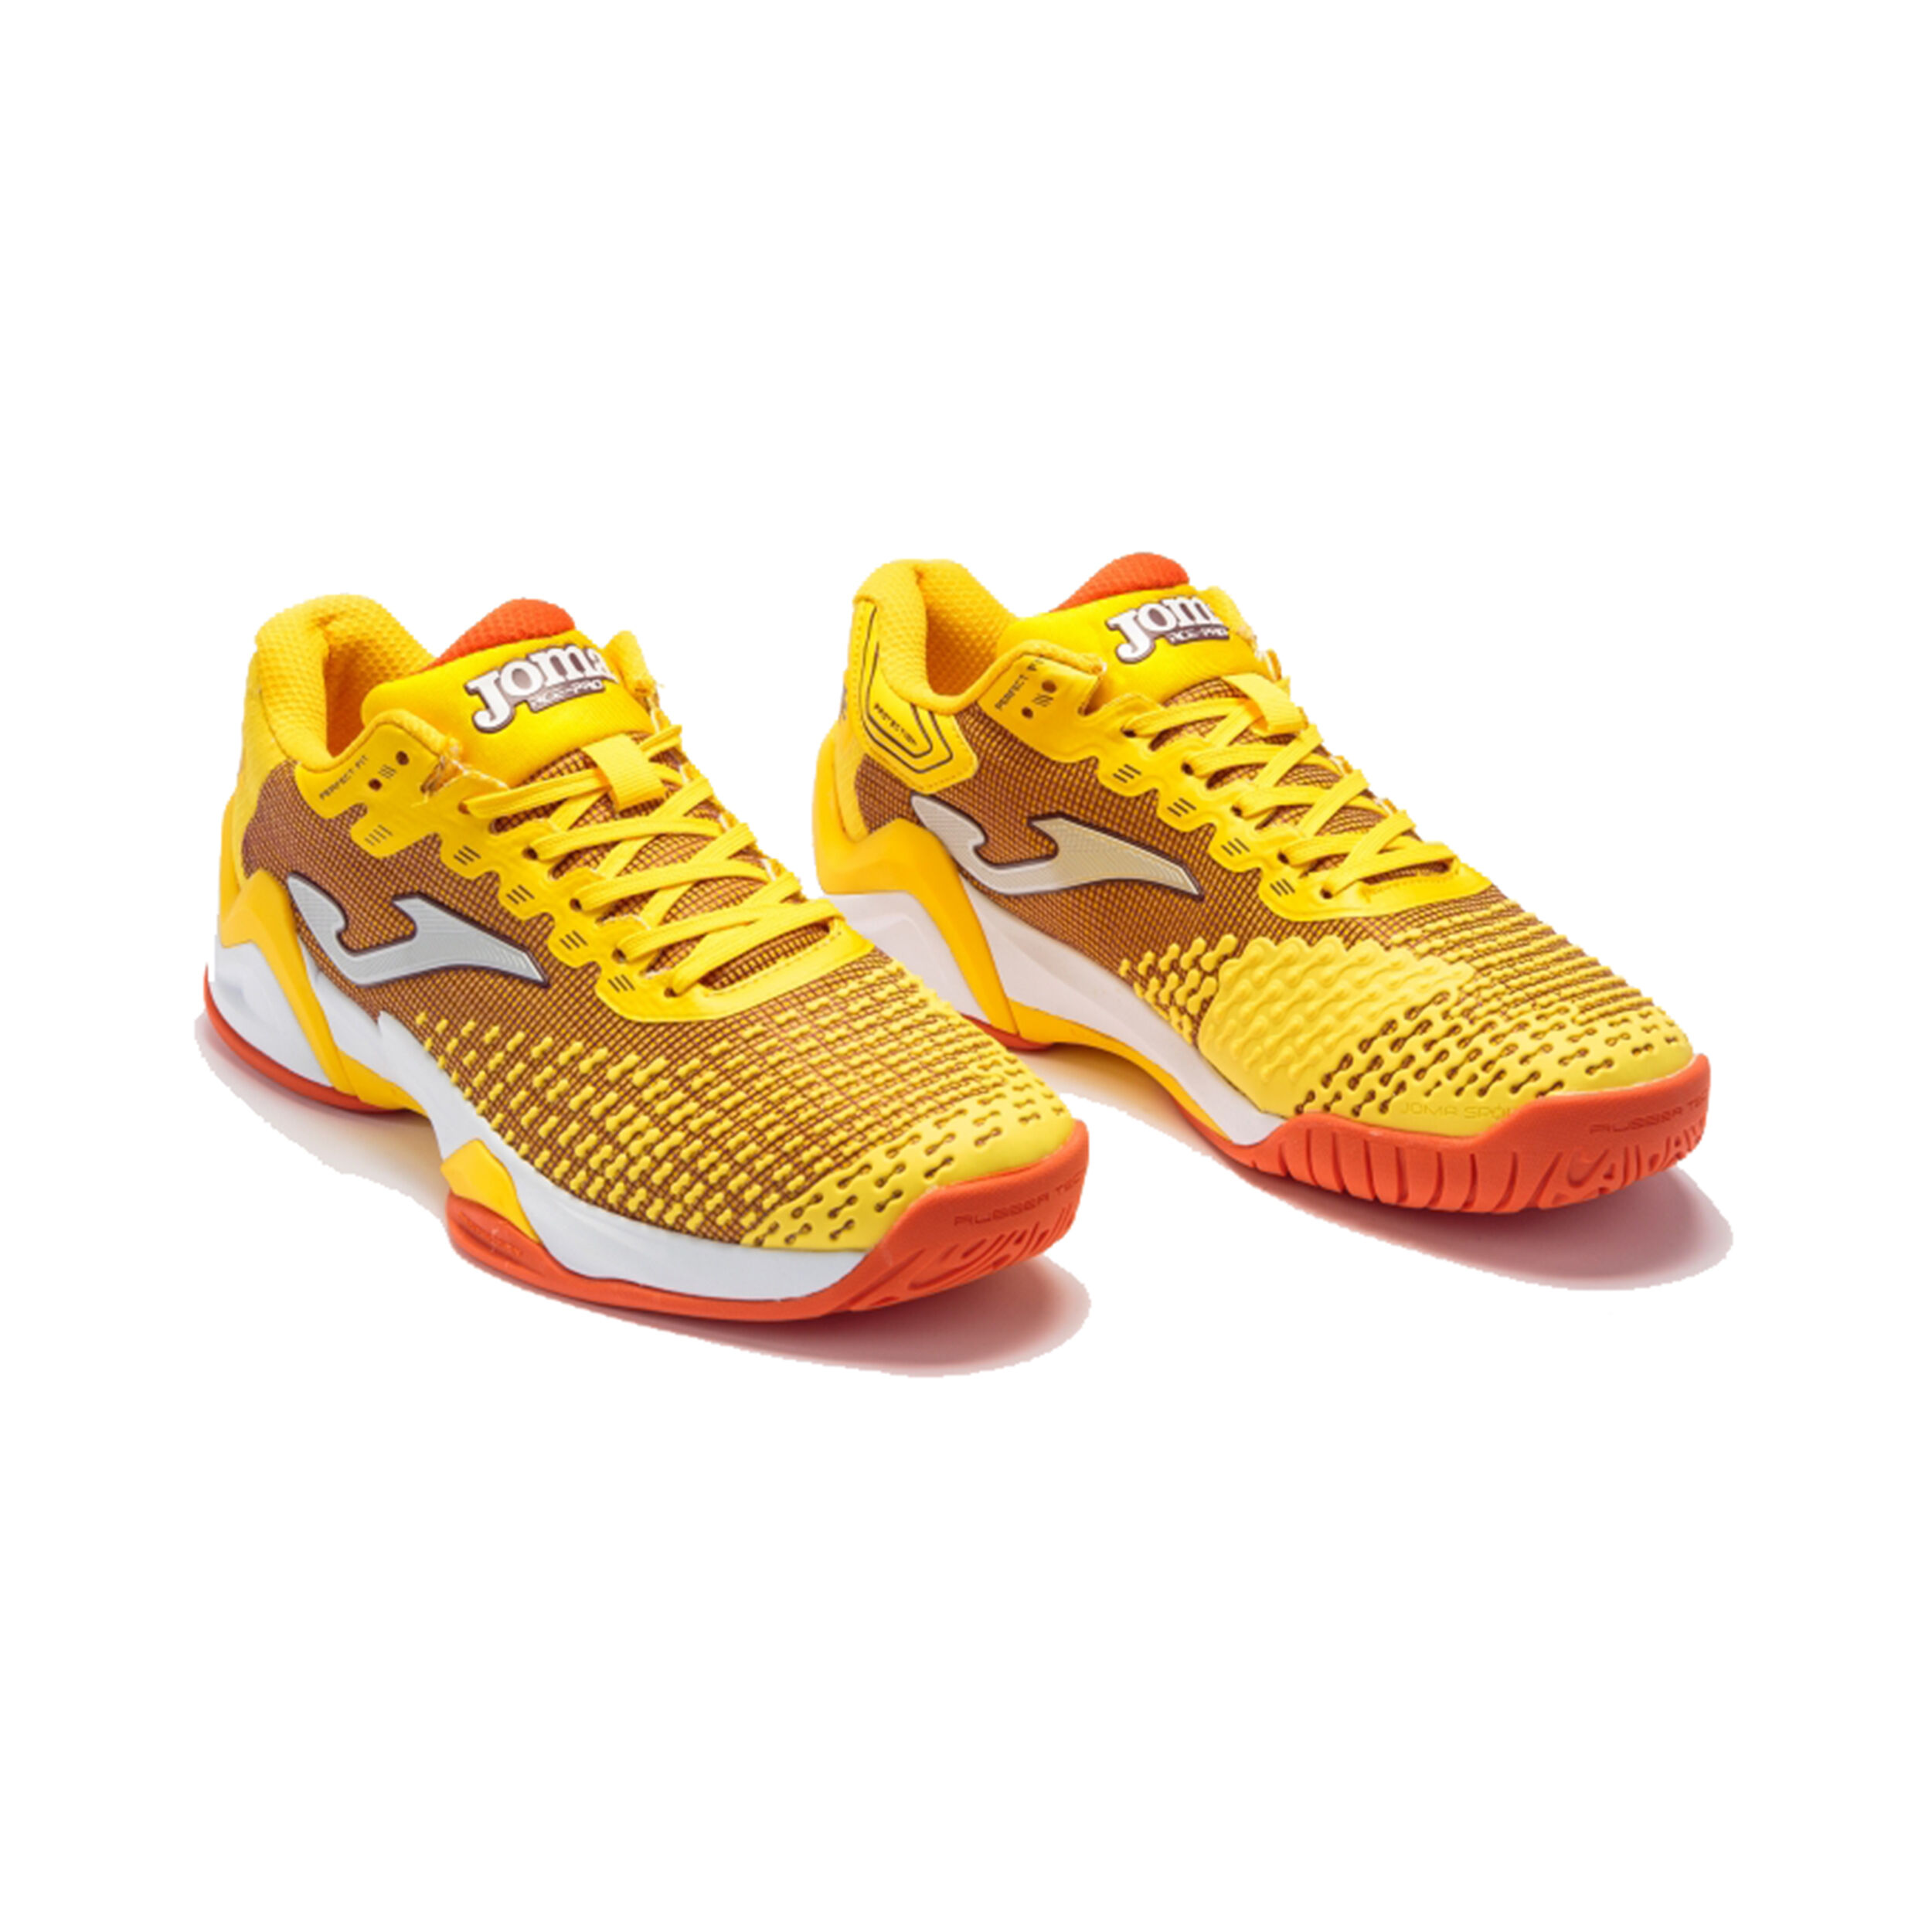 Ace Pro Clay Court Shoe Men - Golden Yellow, Orange